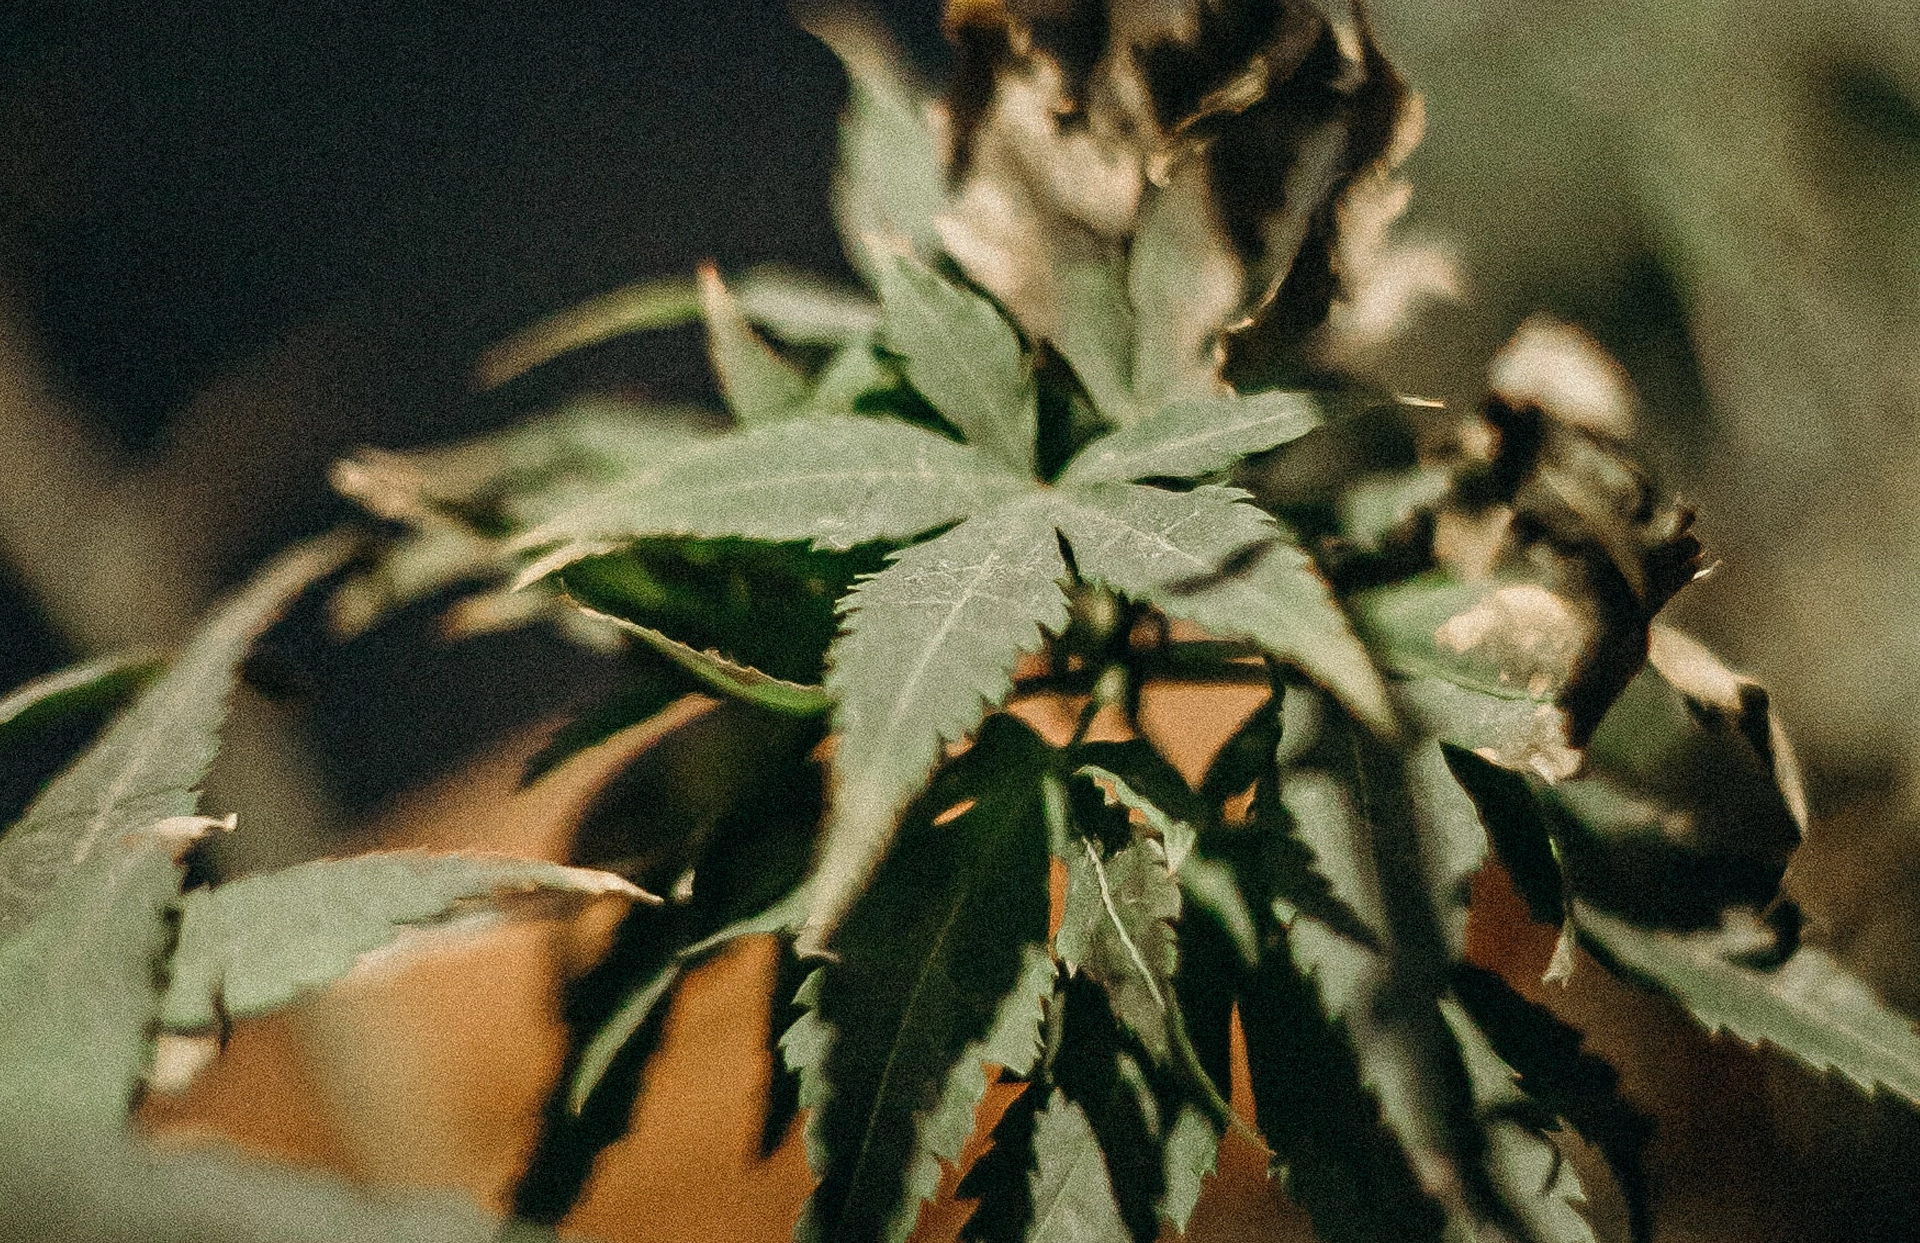 Dark Green Cannabis Plant